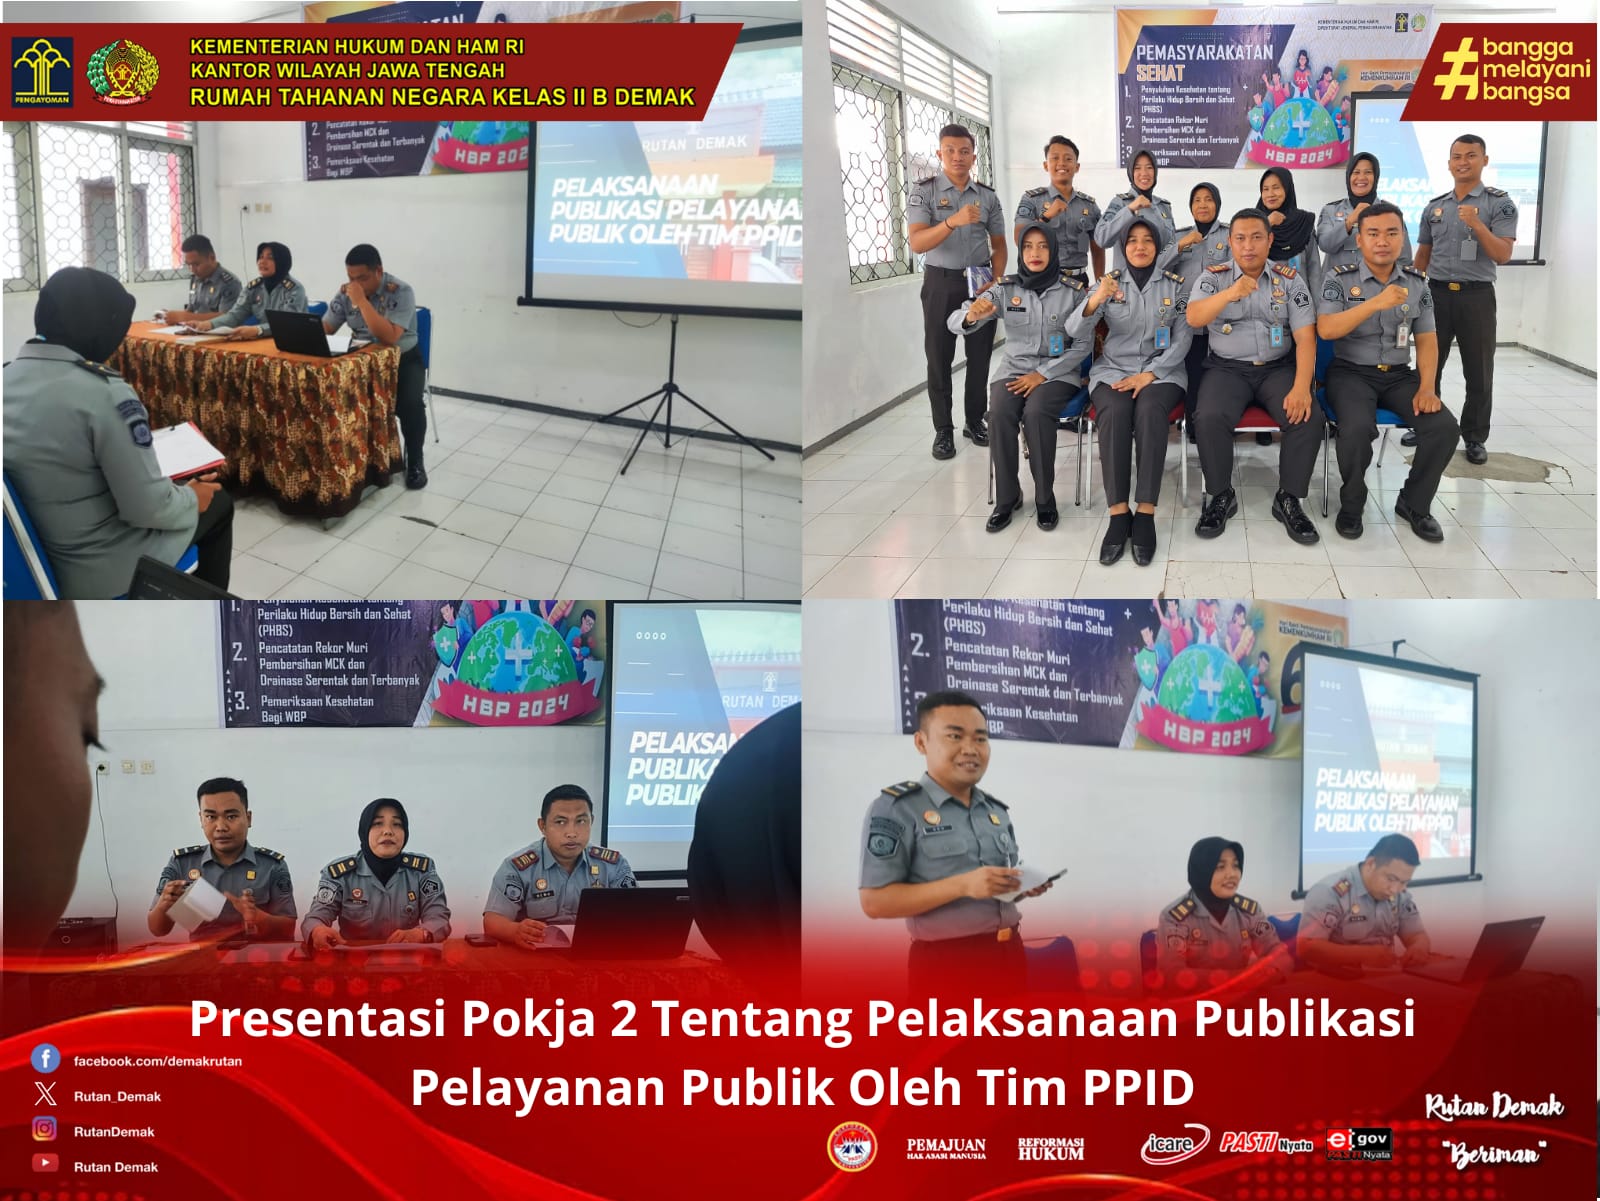 Presentasi Pokja 2 Bahas Pelaksanaan Publikasi Pelayanan Publik oleh Tim PPID